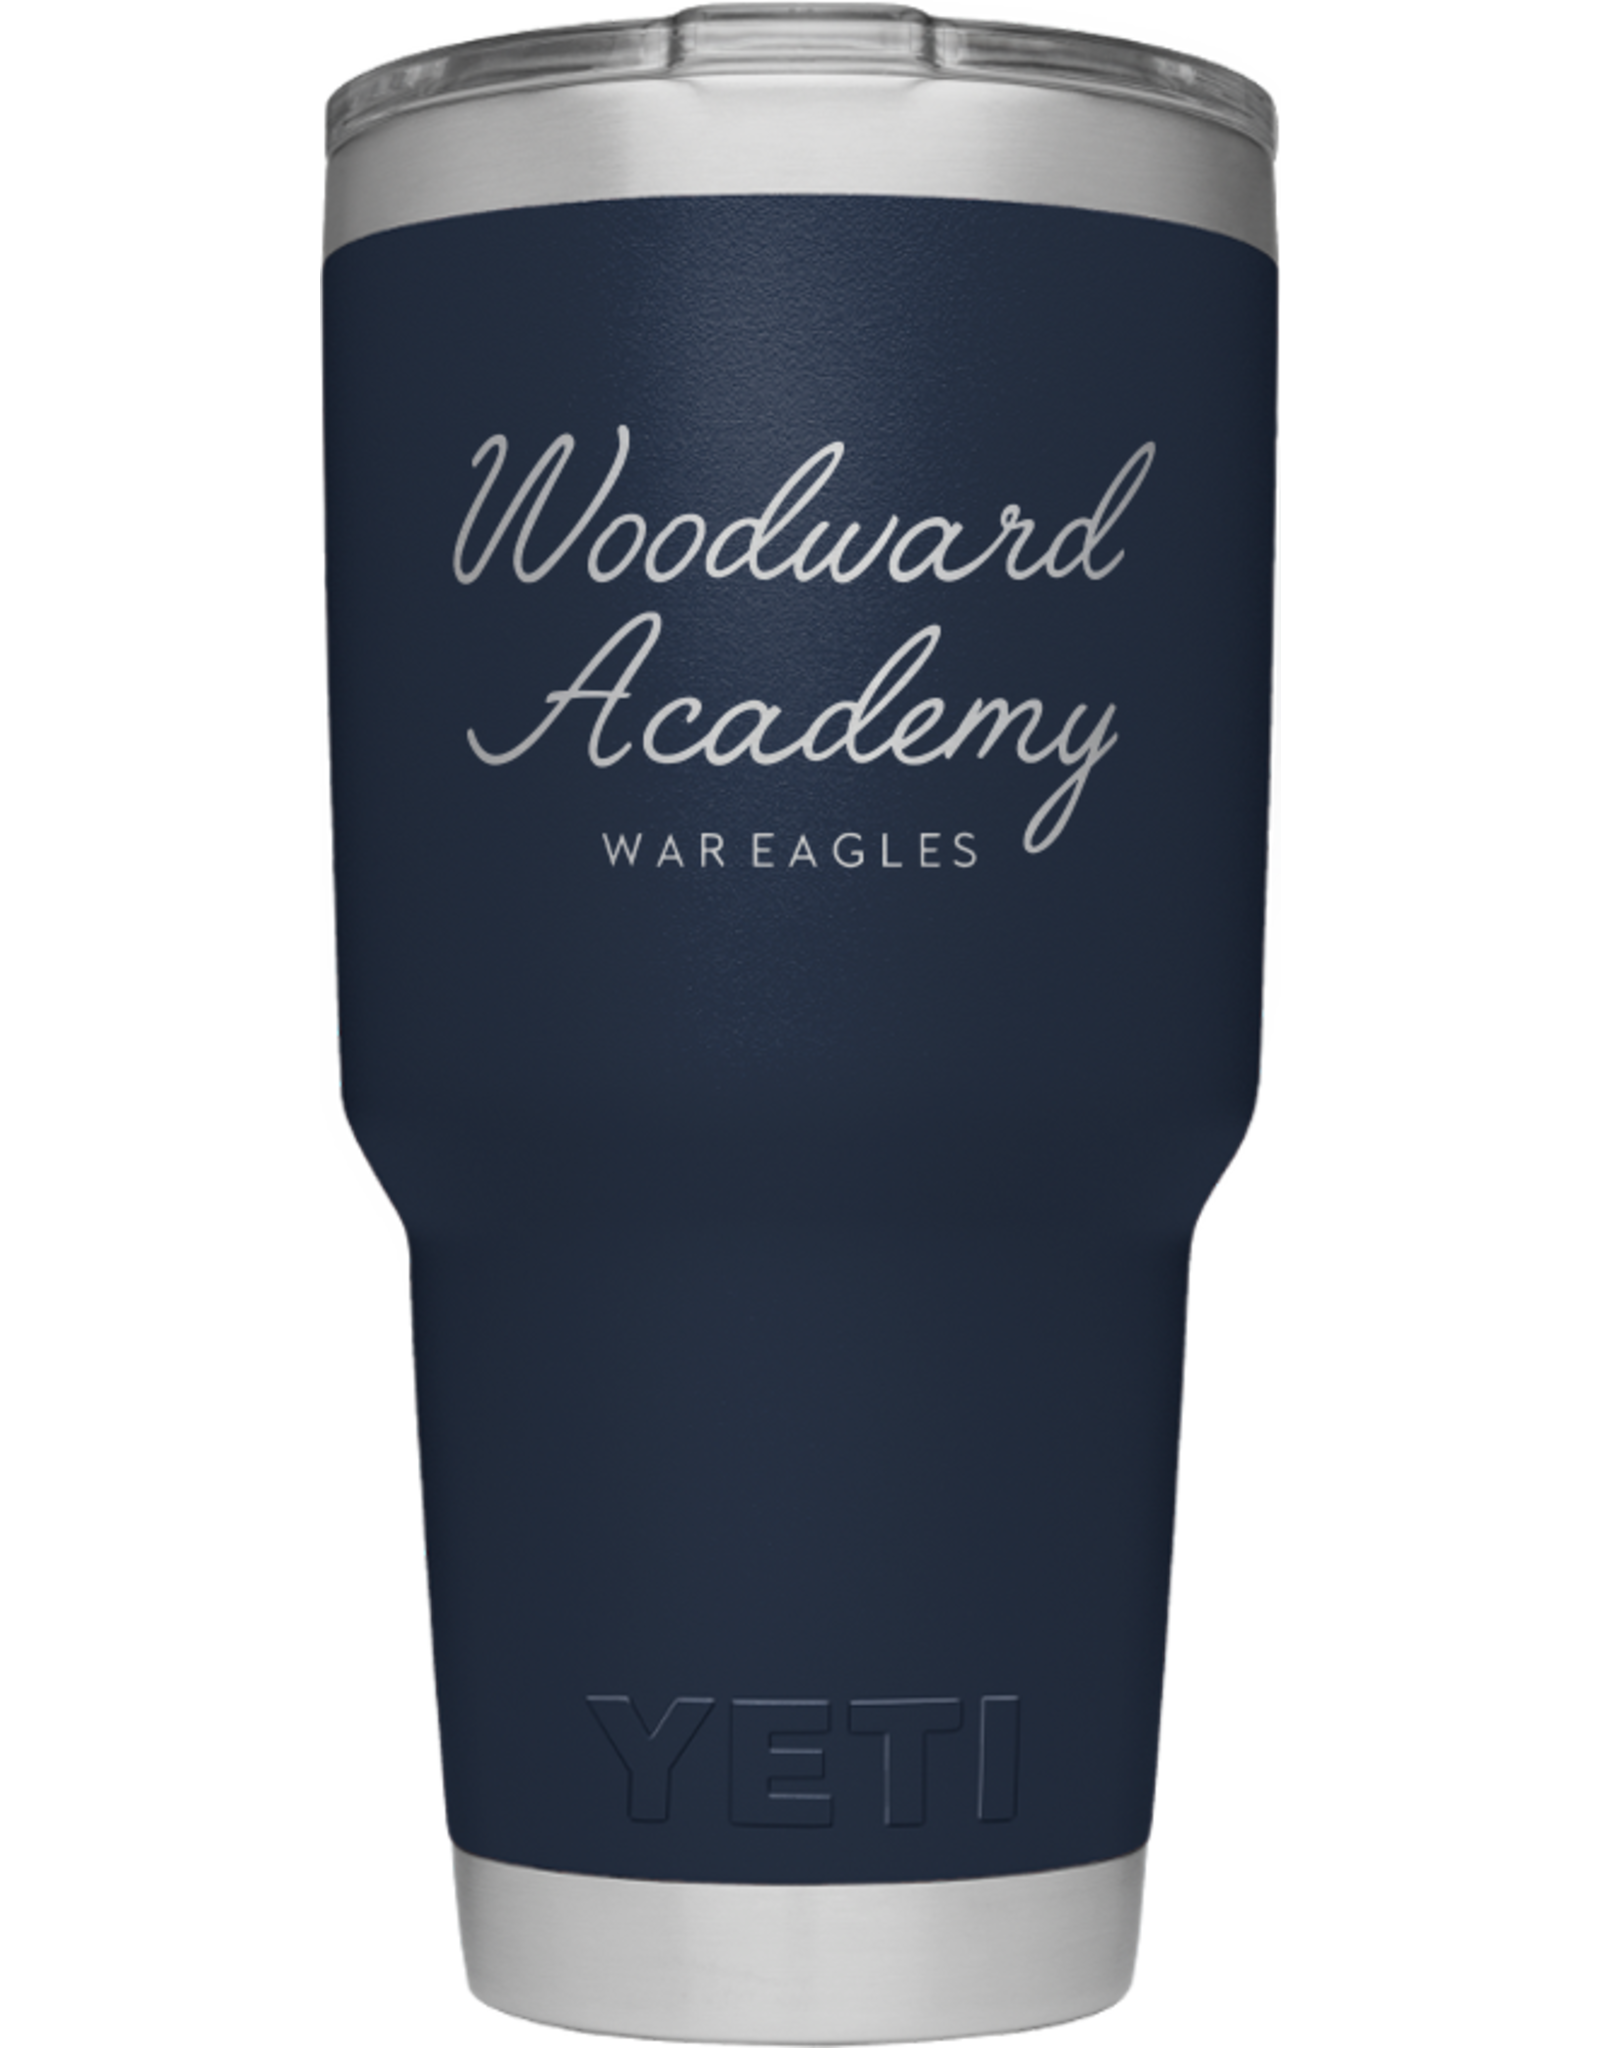 30 oz YETI Cursive - Woodward Academy